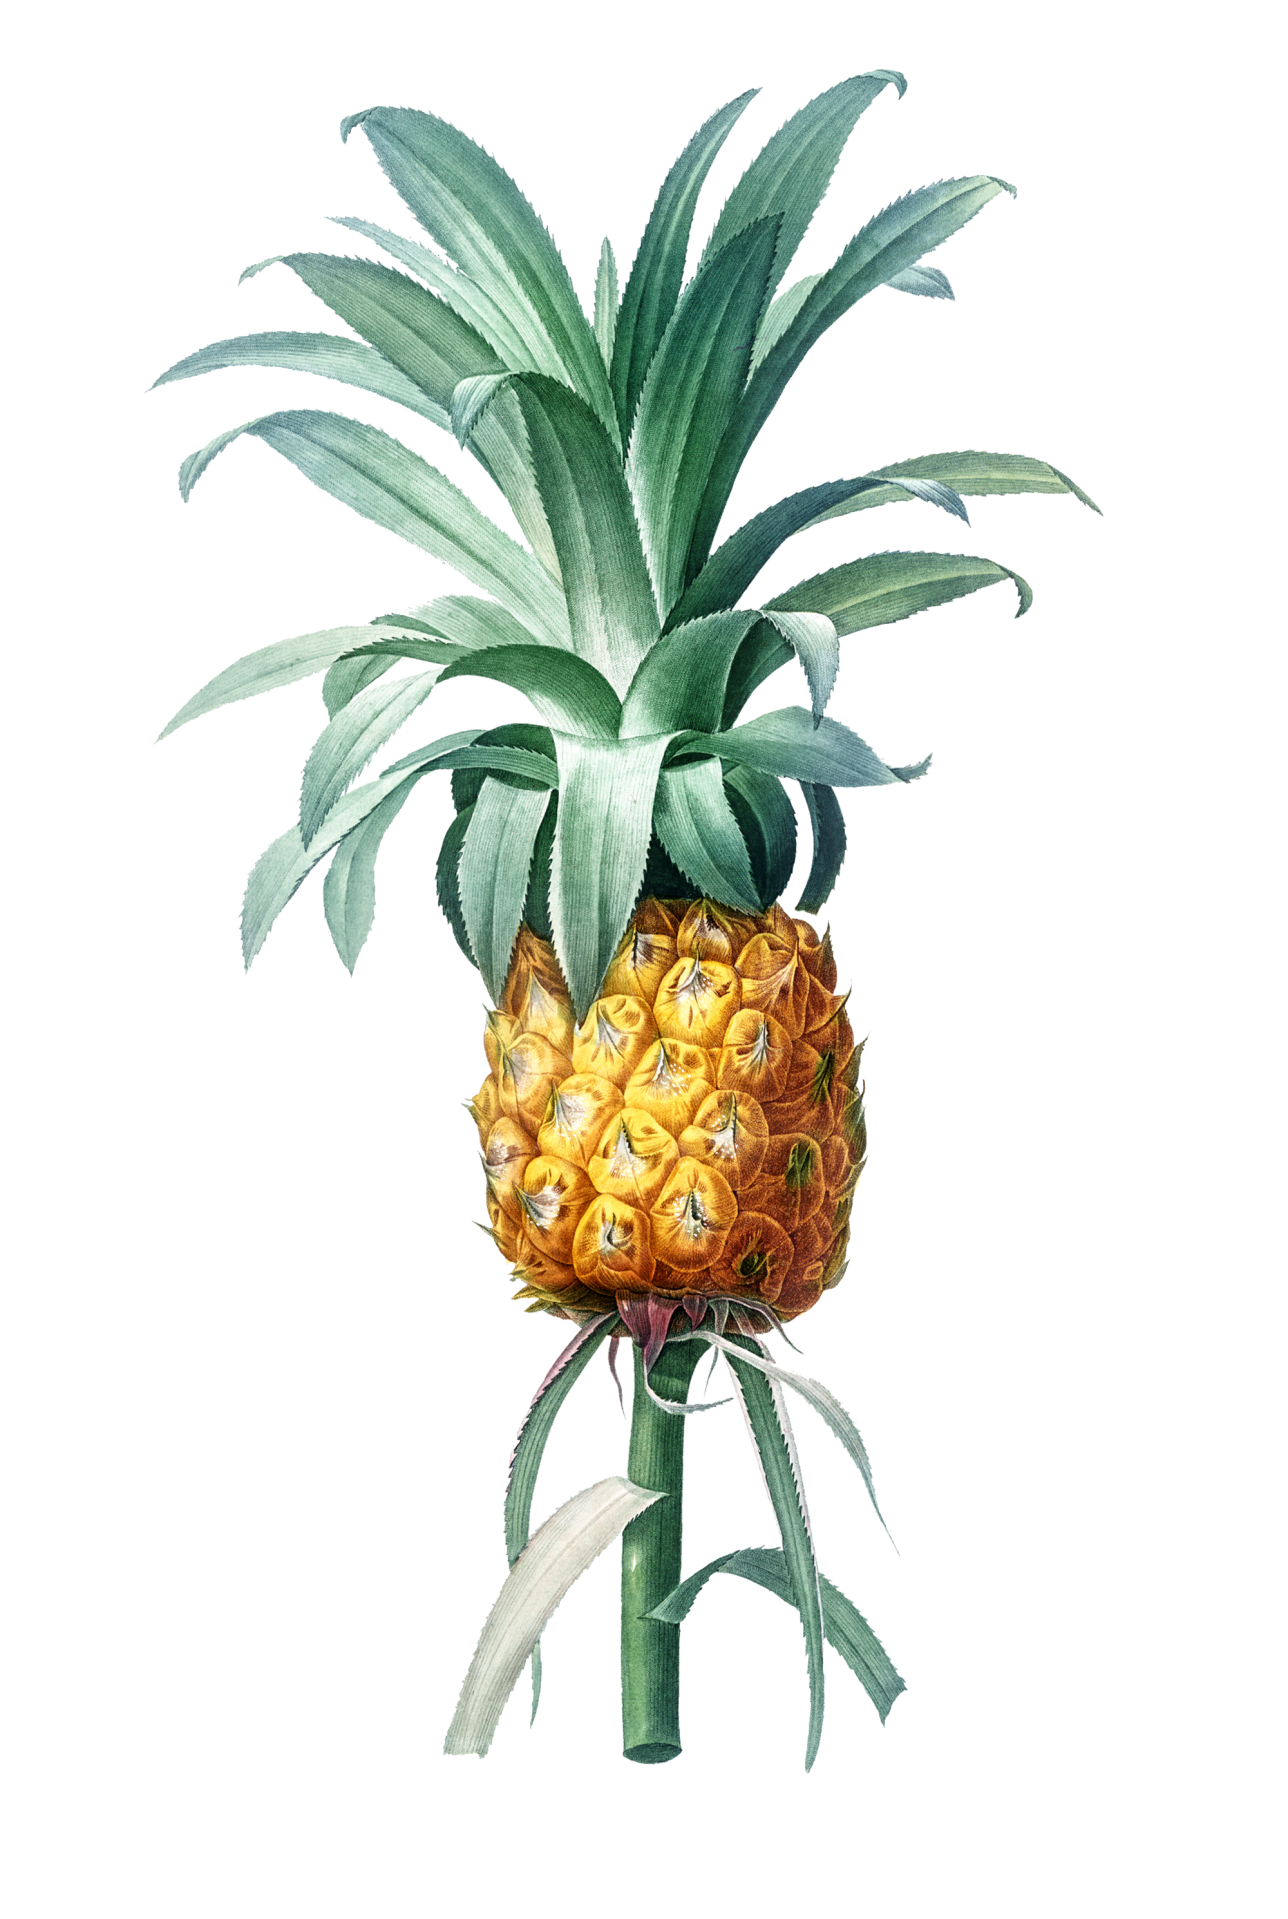 Pineapple Fruit Painting Vintage